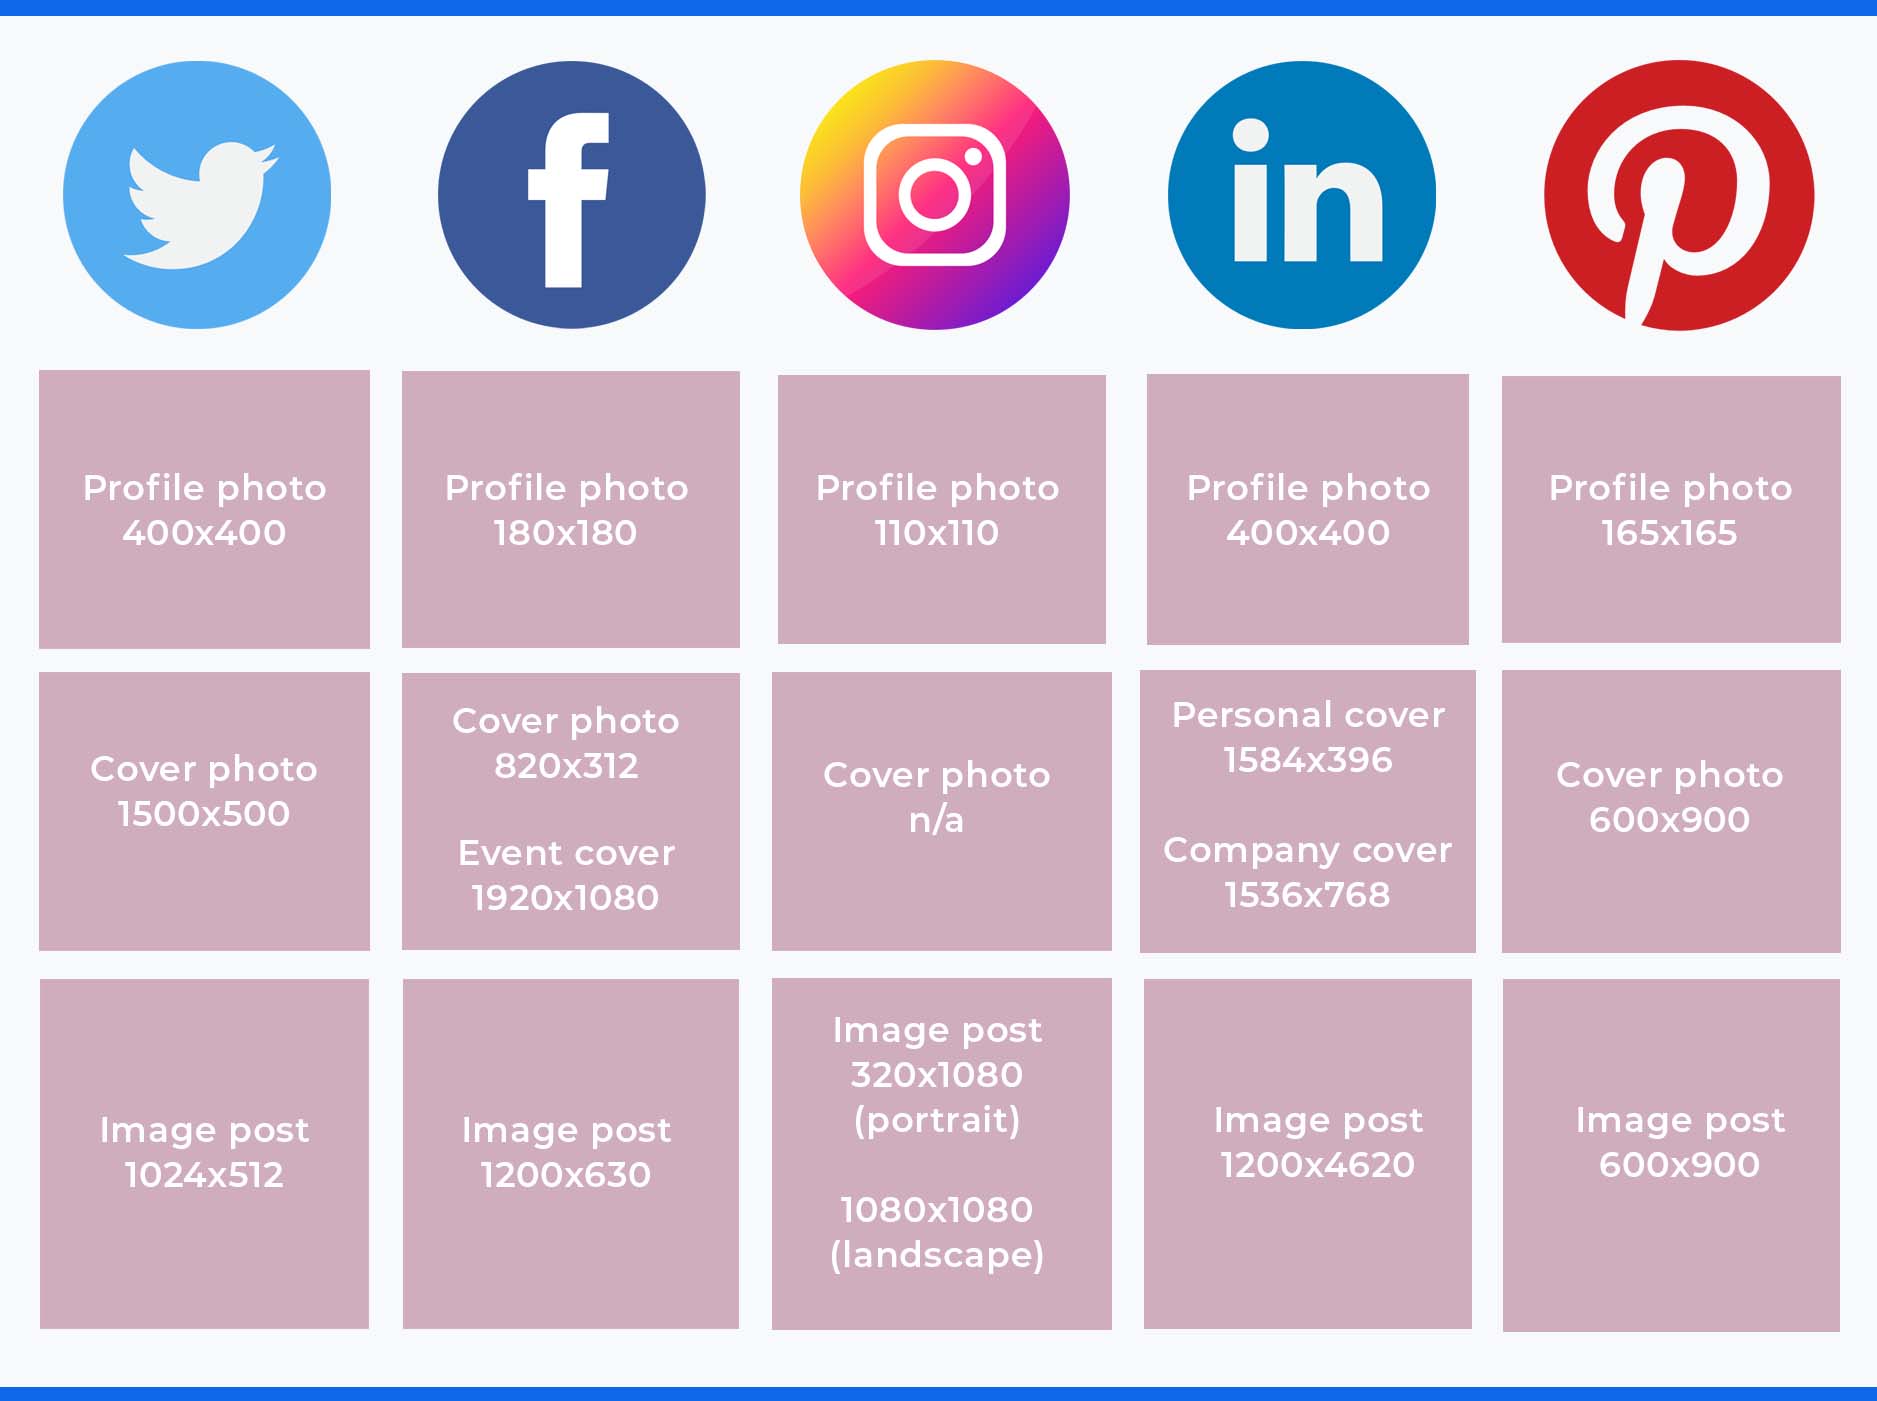 Social media image sizes chart